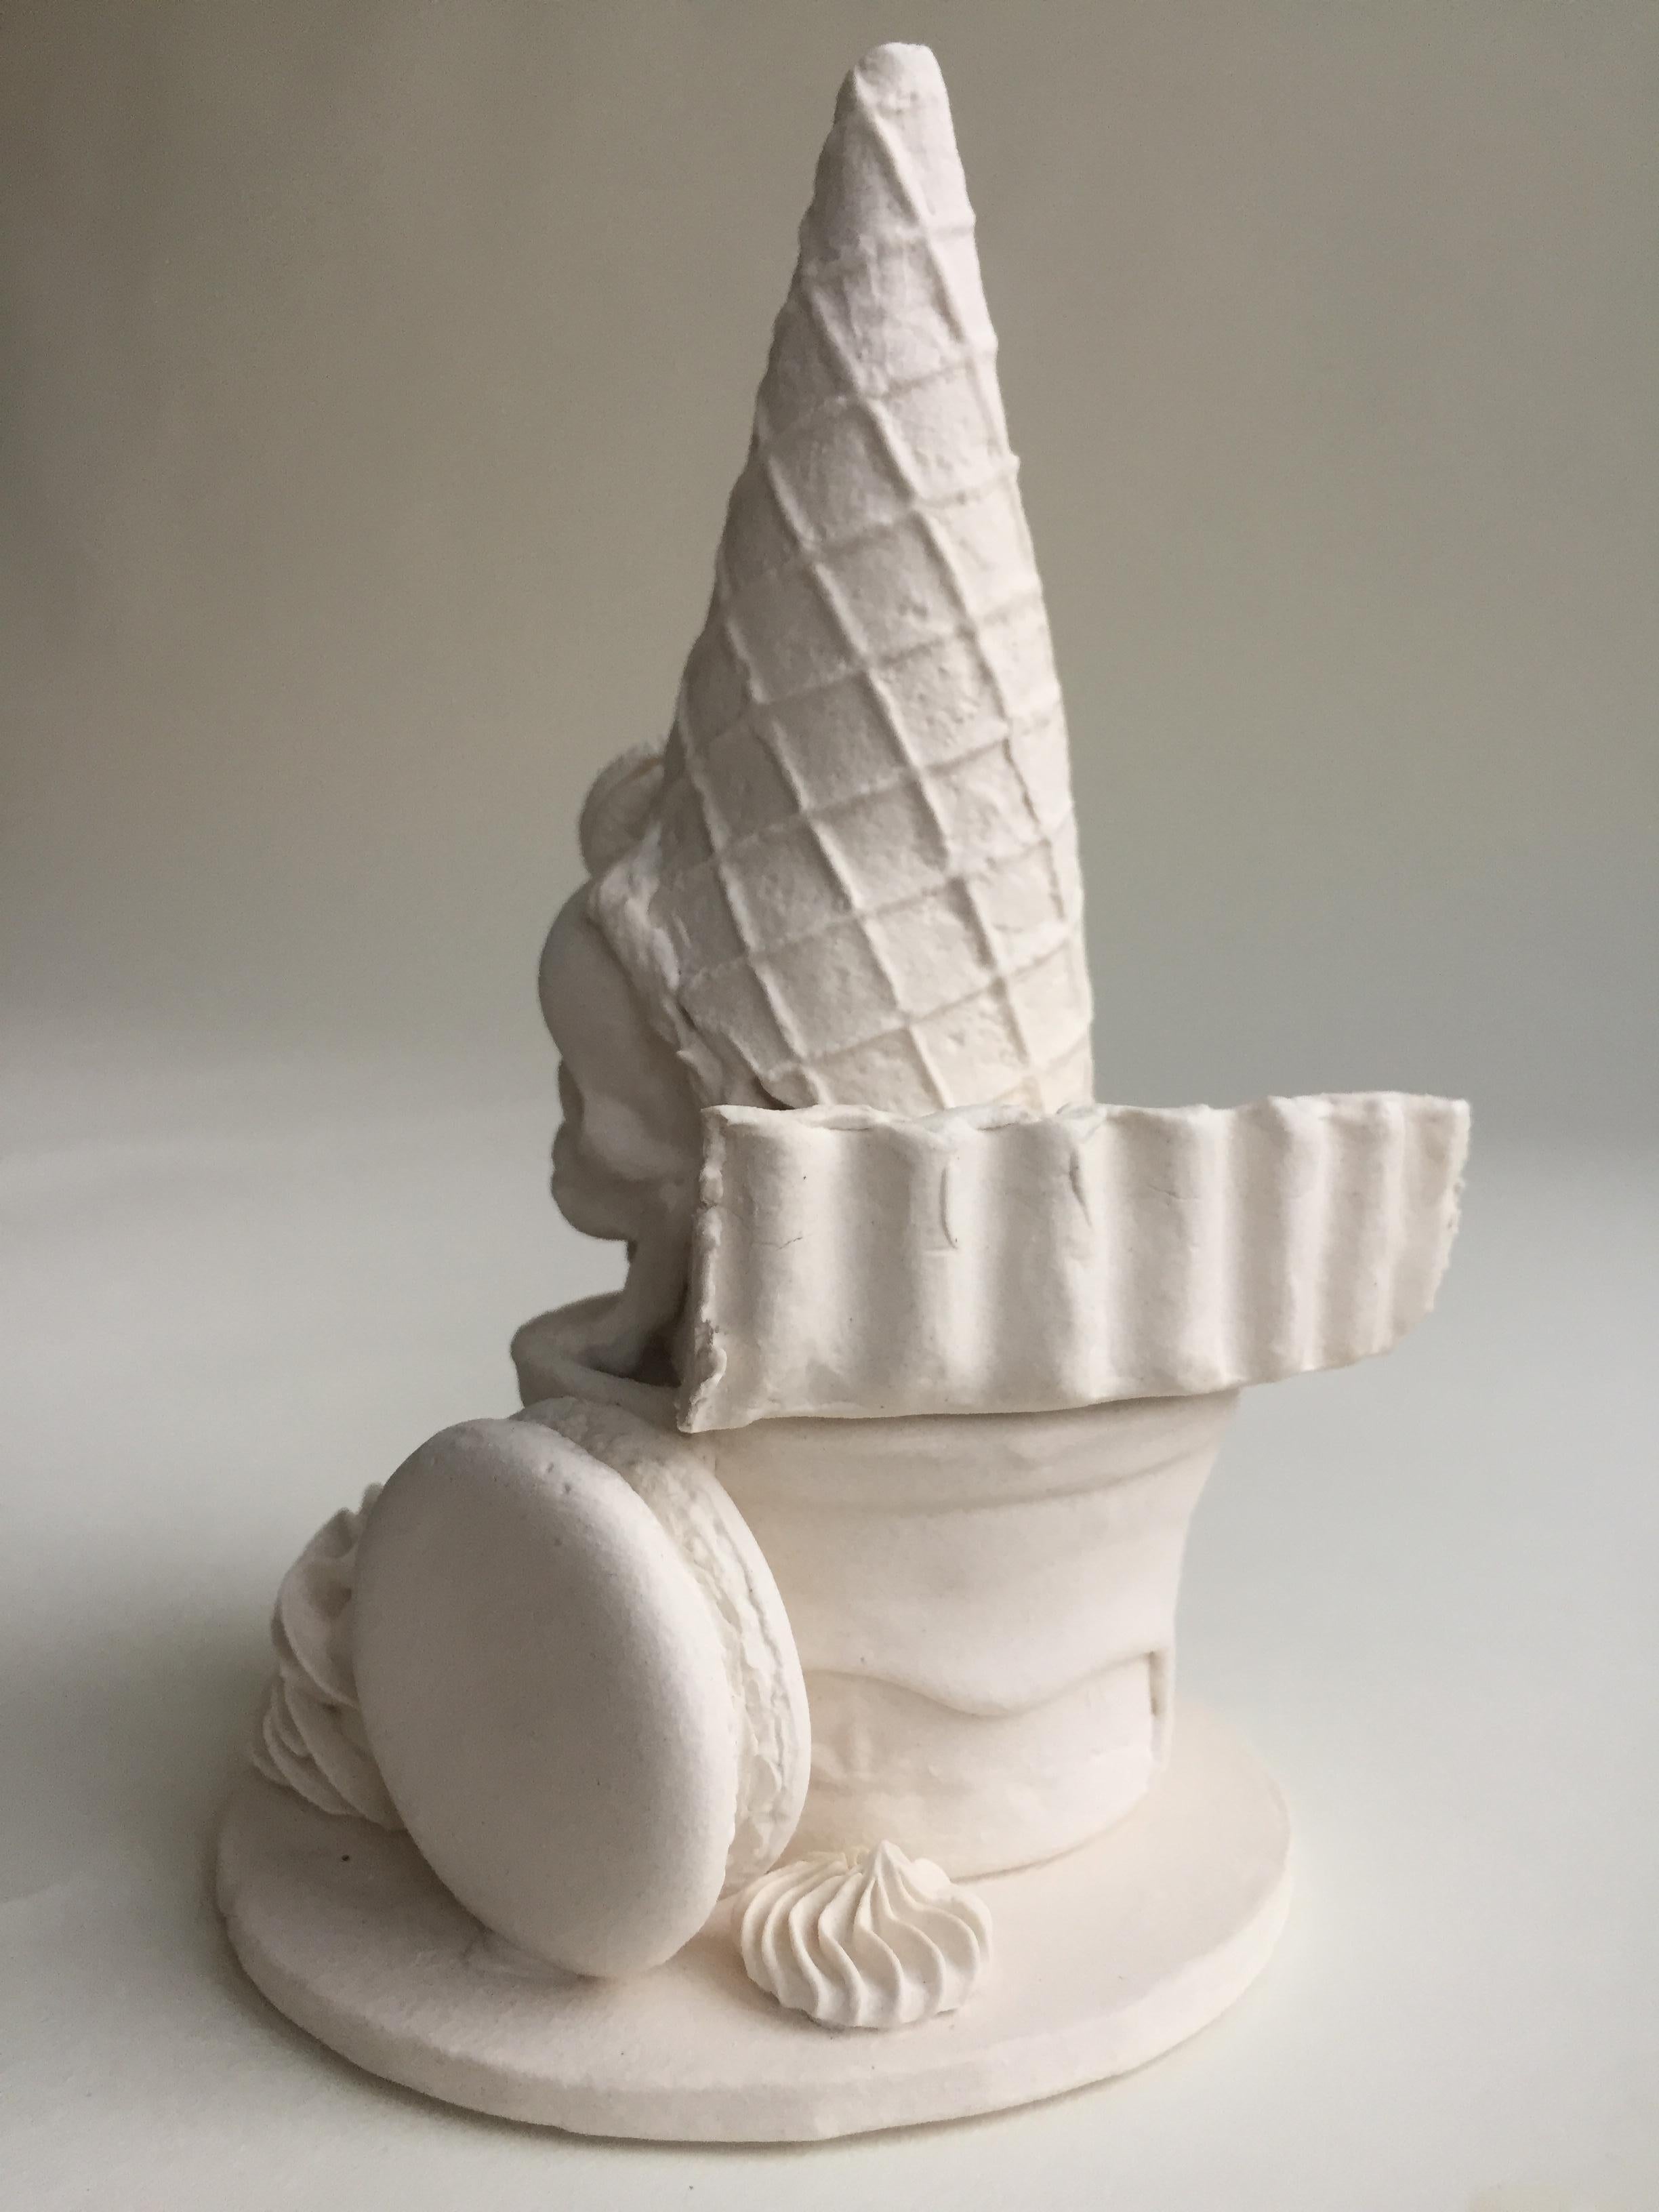 Dessert Sampler - Contemporary Sculpture by Jacqueline Tse